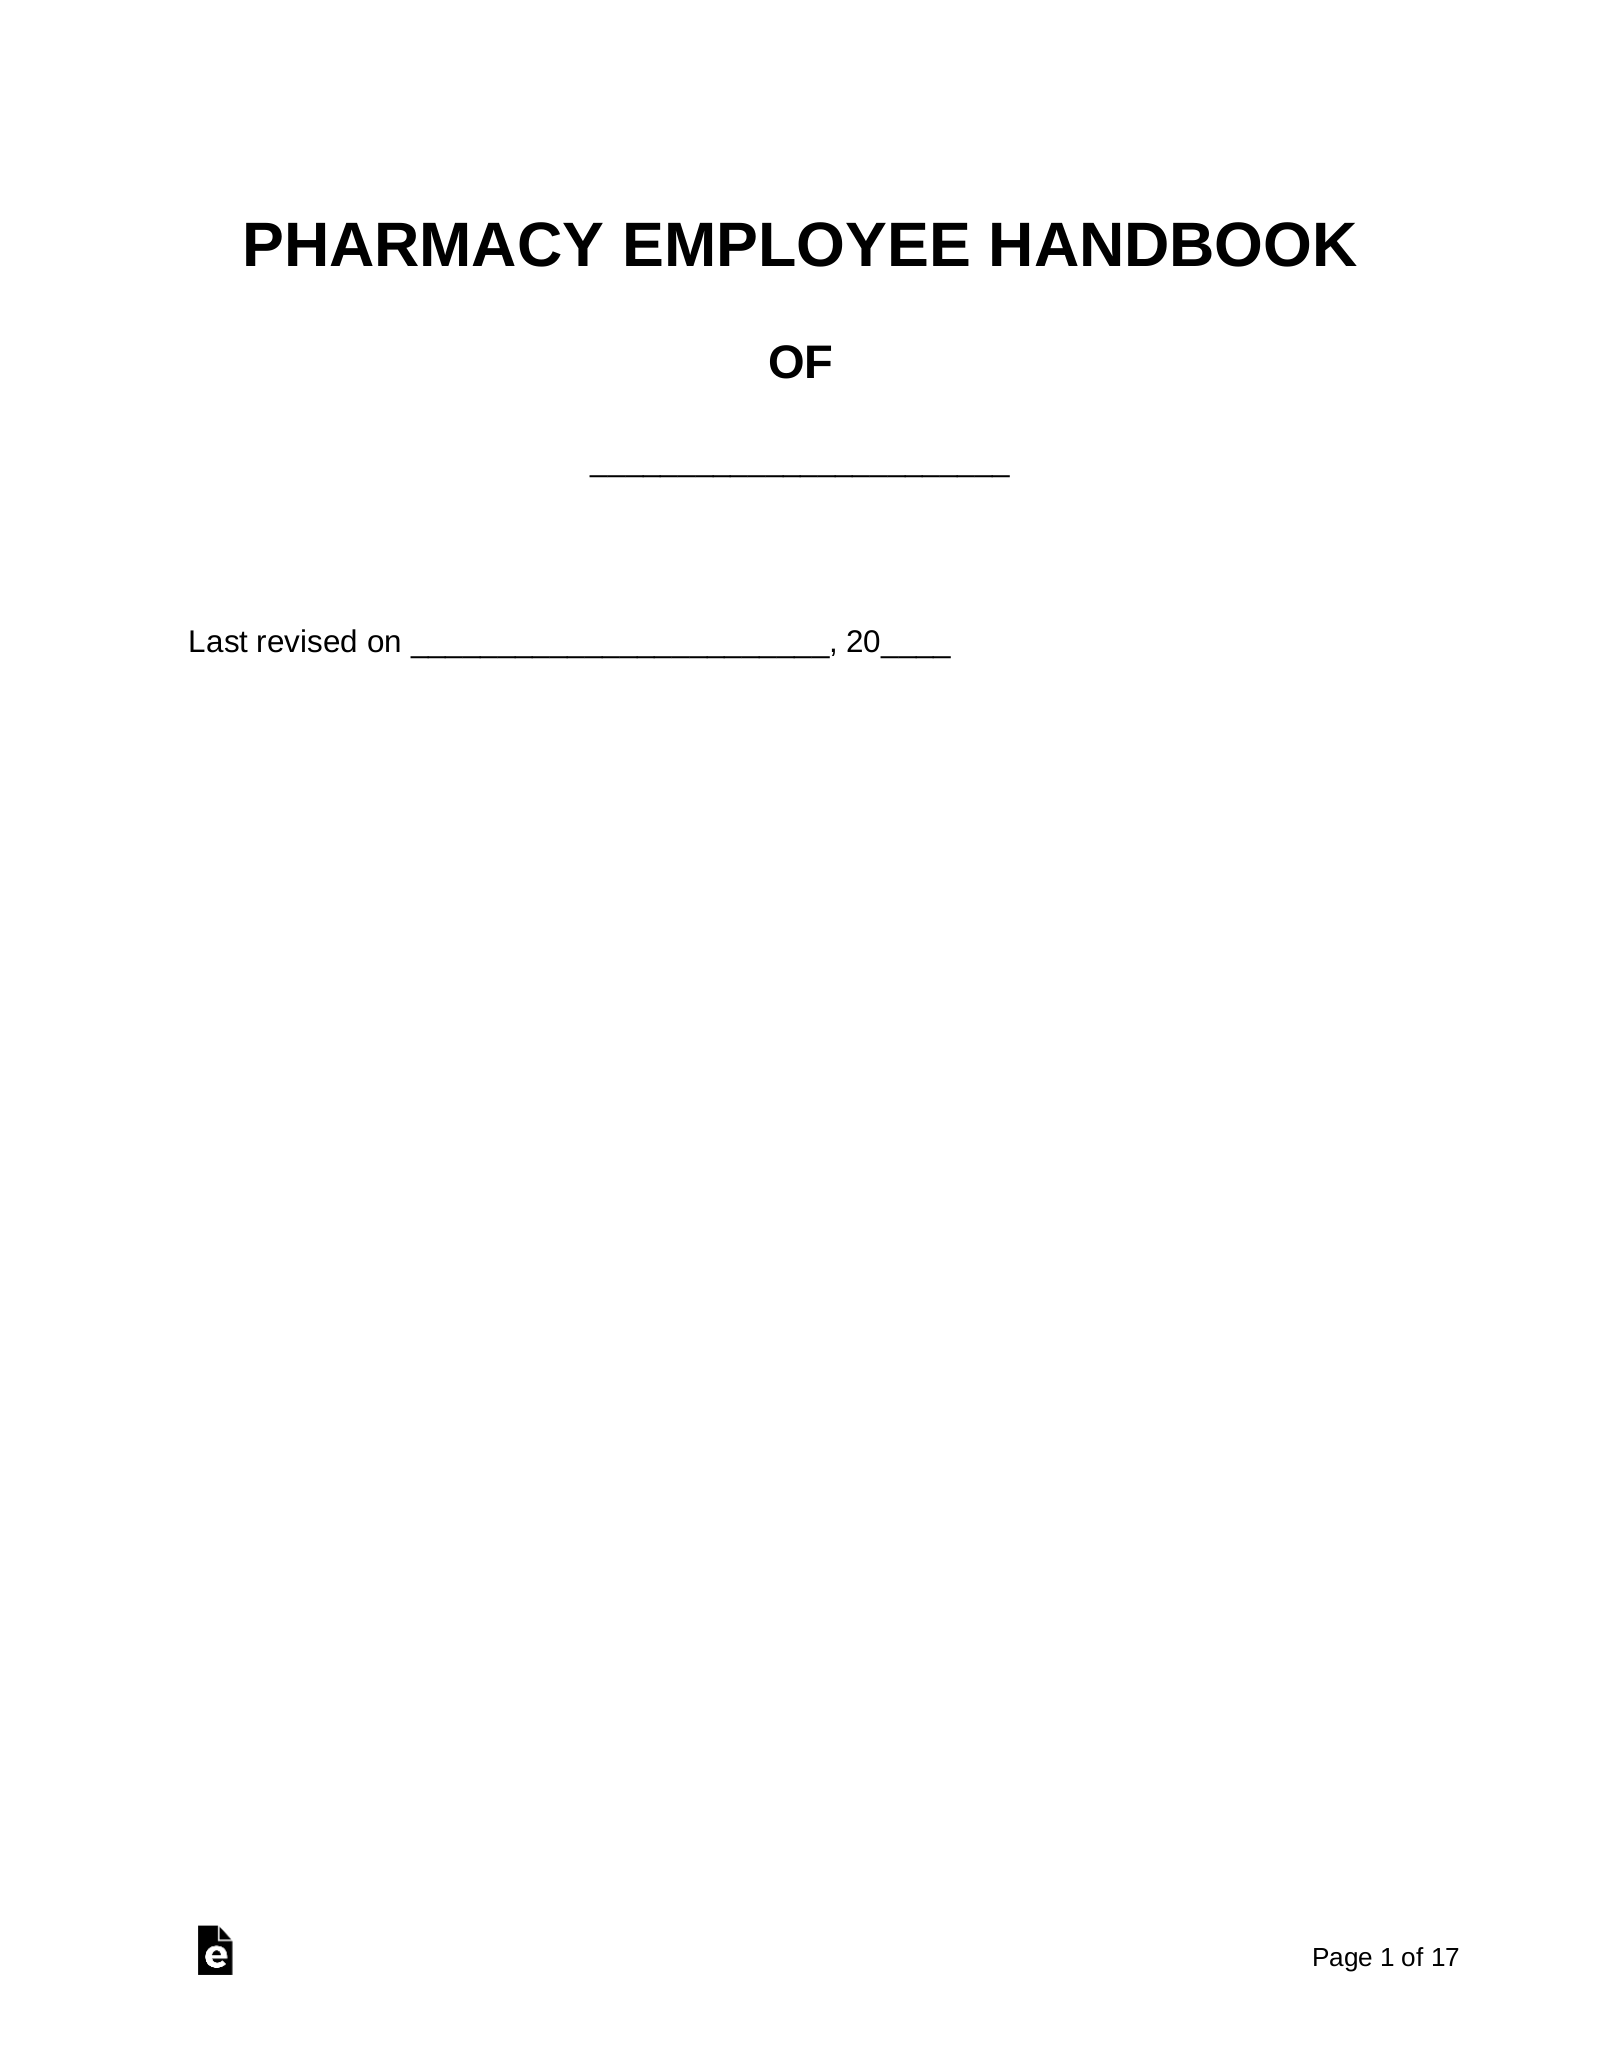 Pharmacy Employee Handbook